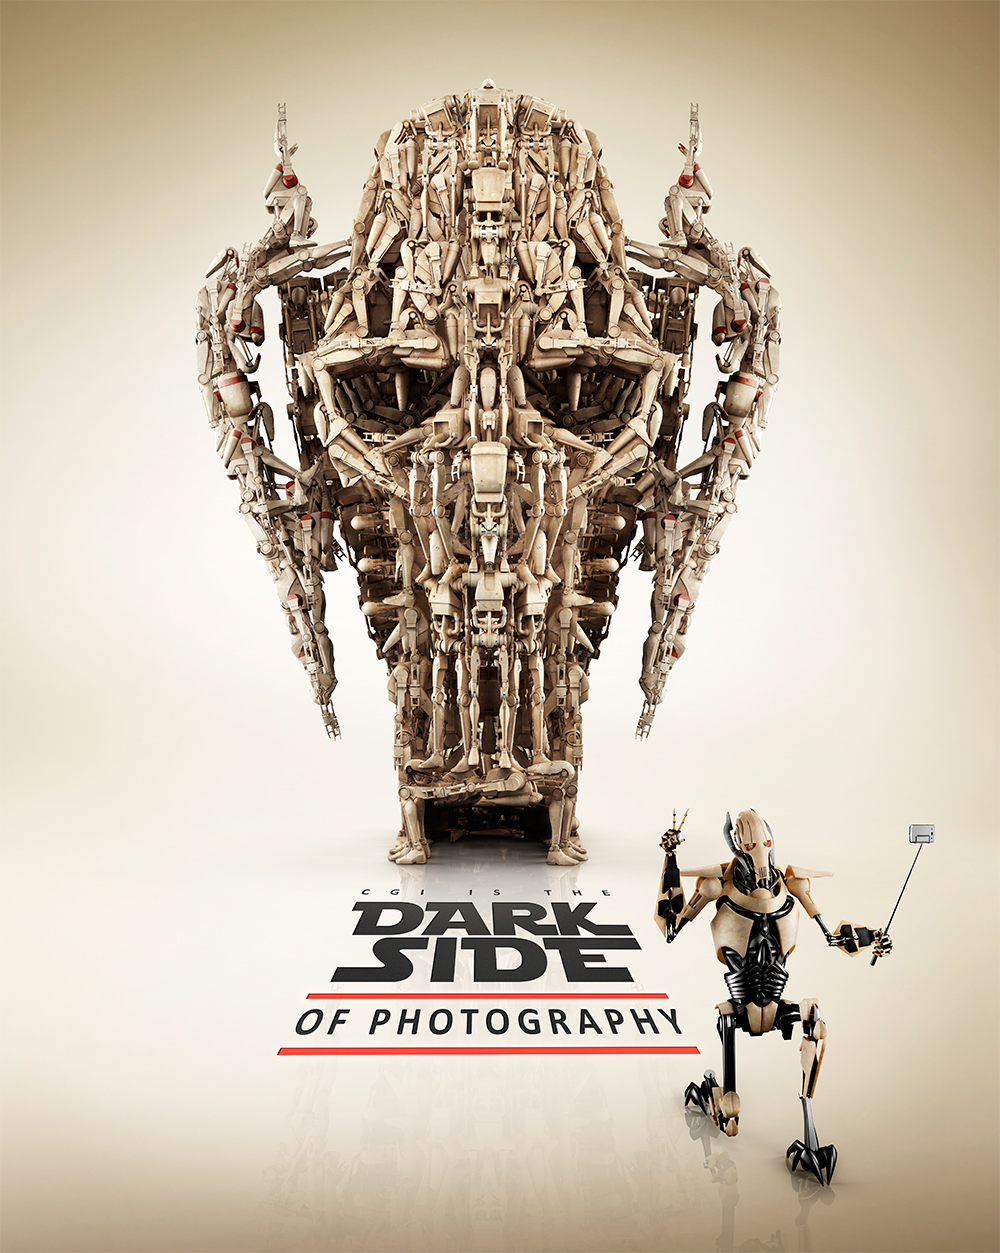 CGI 3D star wars darth vader Dark side stormtrooper Empire lord fener Helmet structure bodies matteo salvador